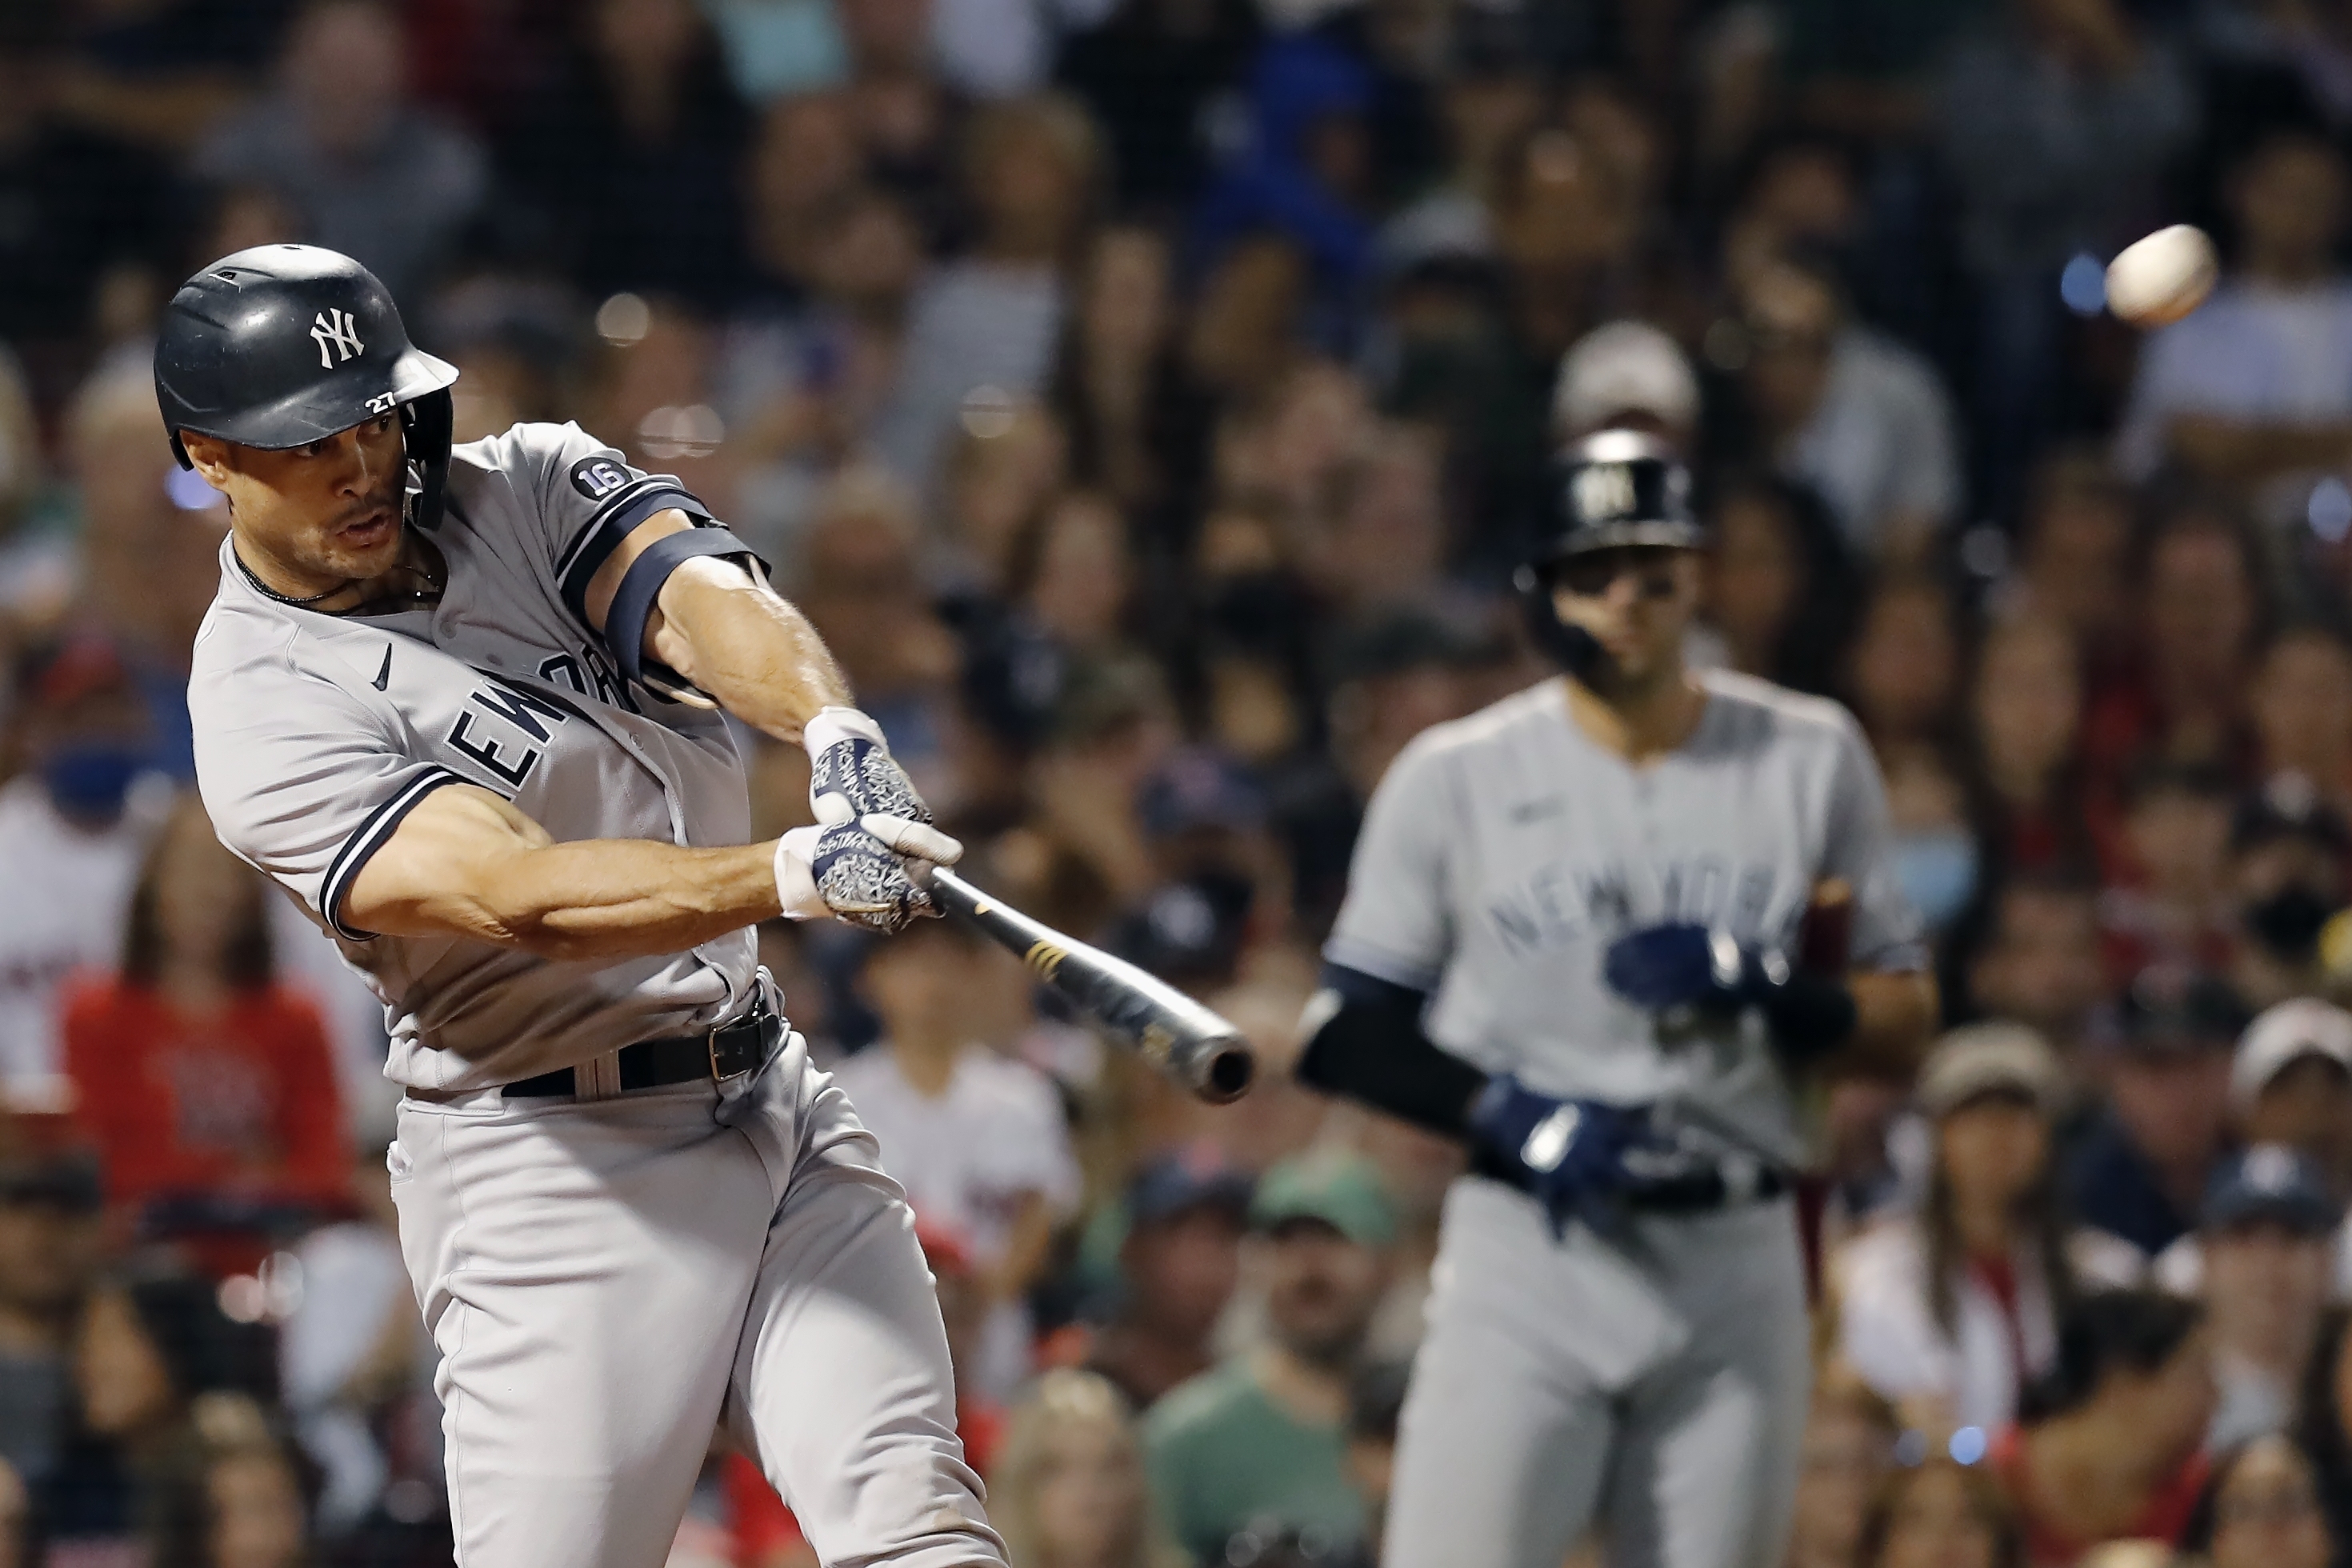 New York Yankees slugger Giancarlo Stanton's clutch grand slam